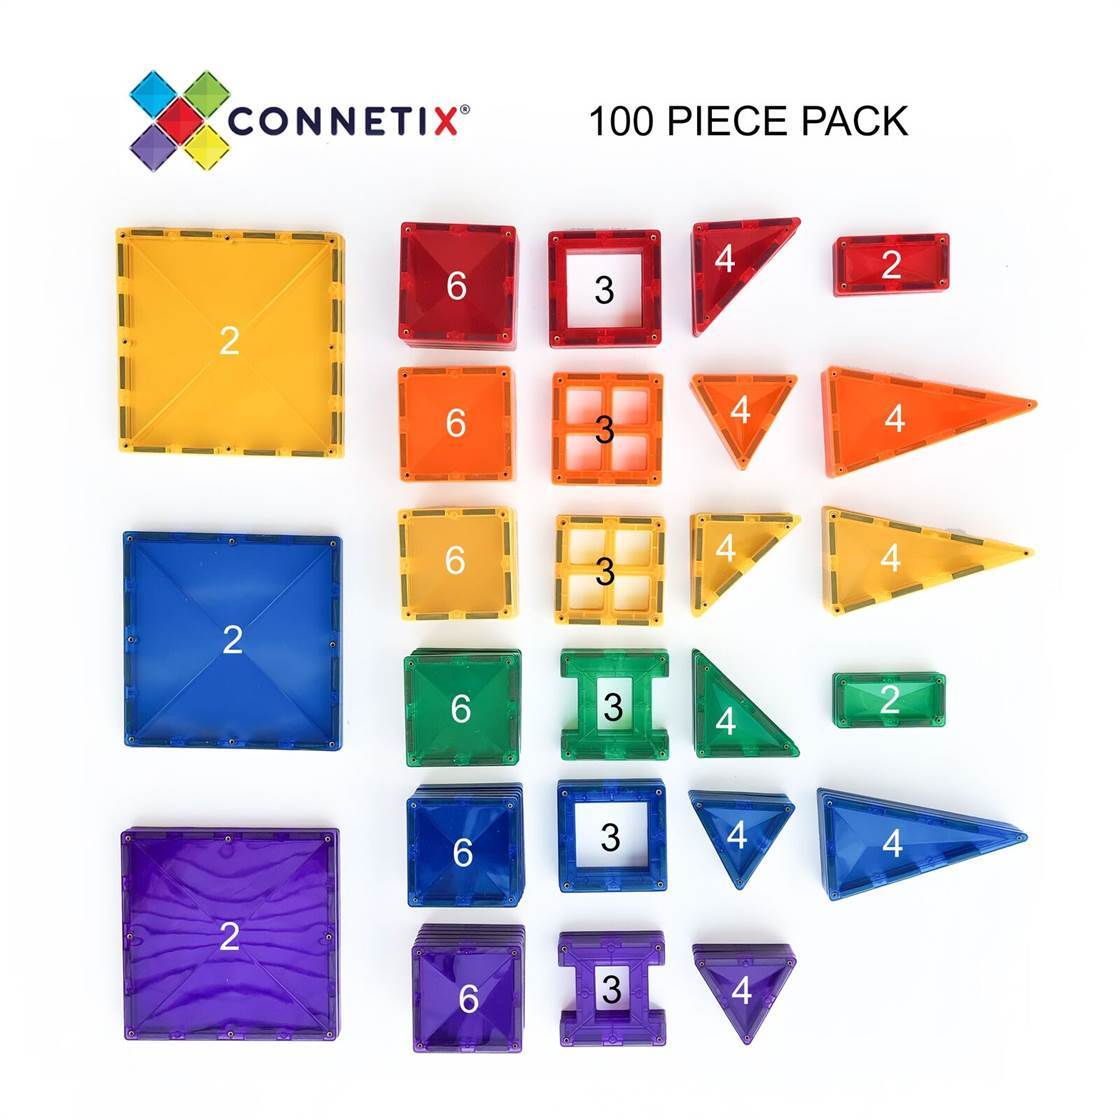 Connetix 100 Piece Piece Creative Pack